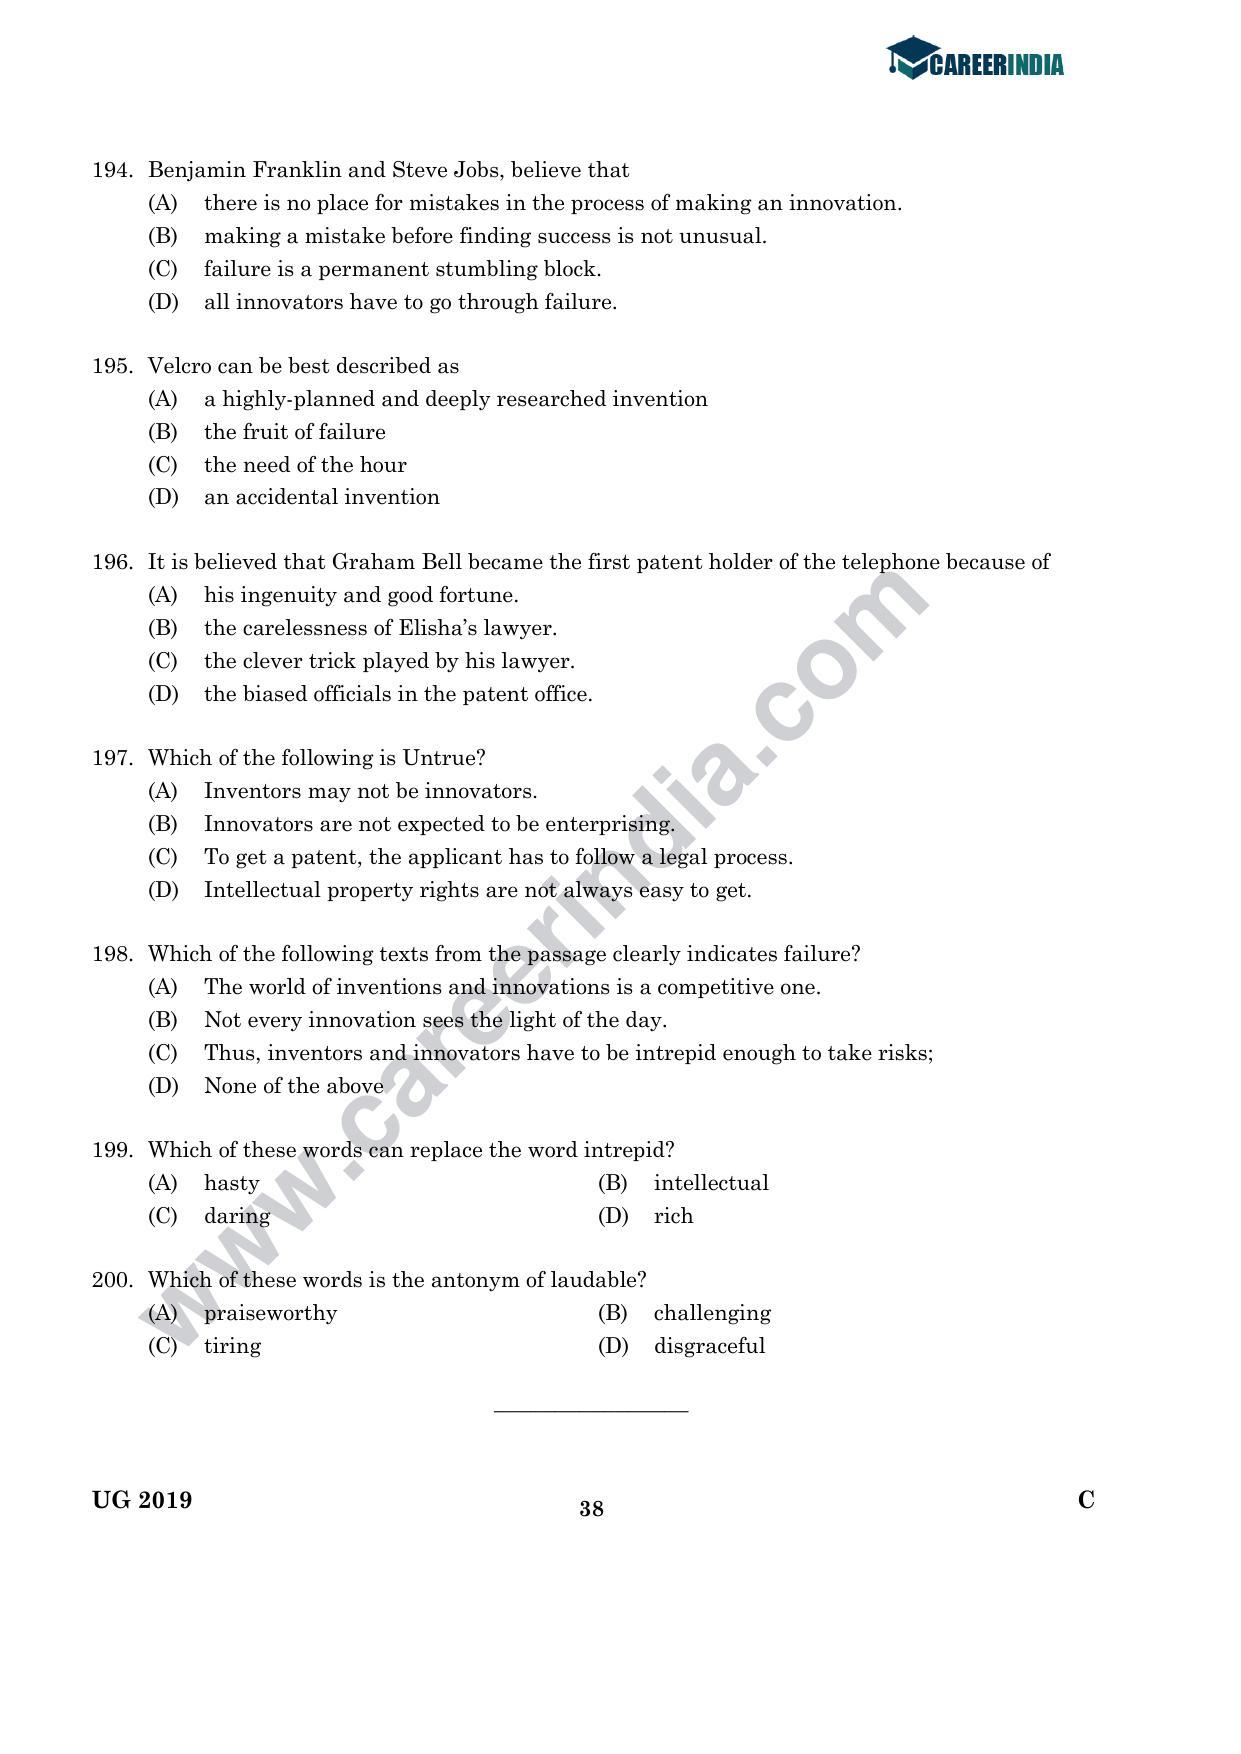 CLAT 2019 UG Legal-Aptitude Question Paper - Page 37